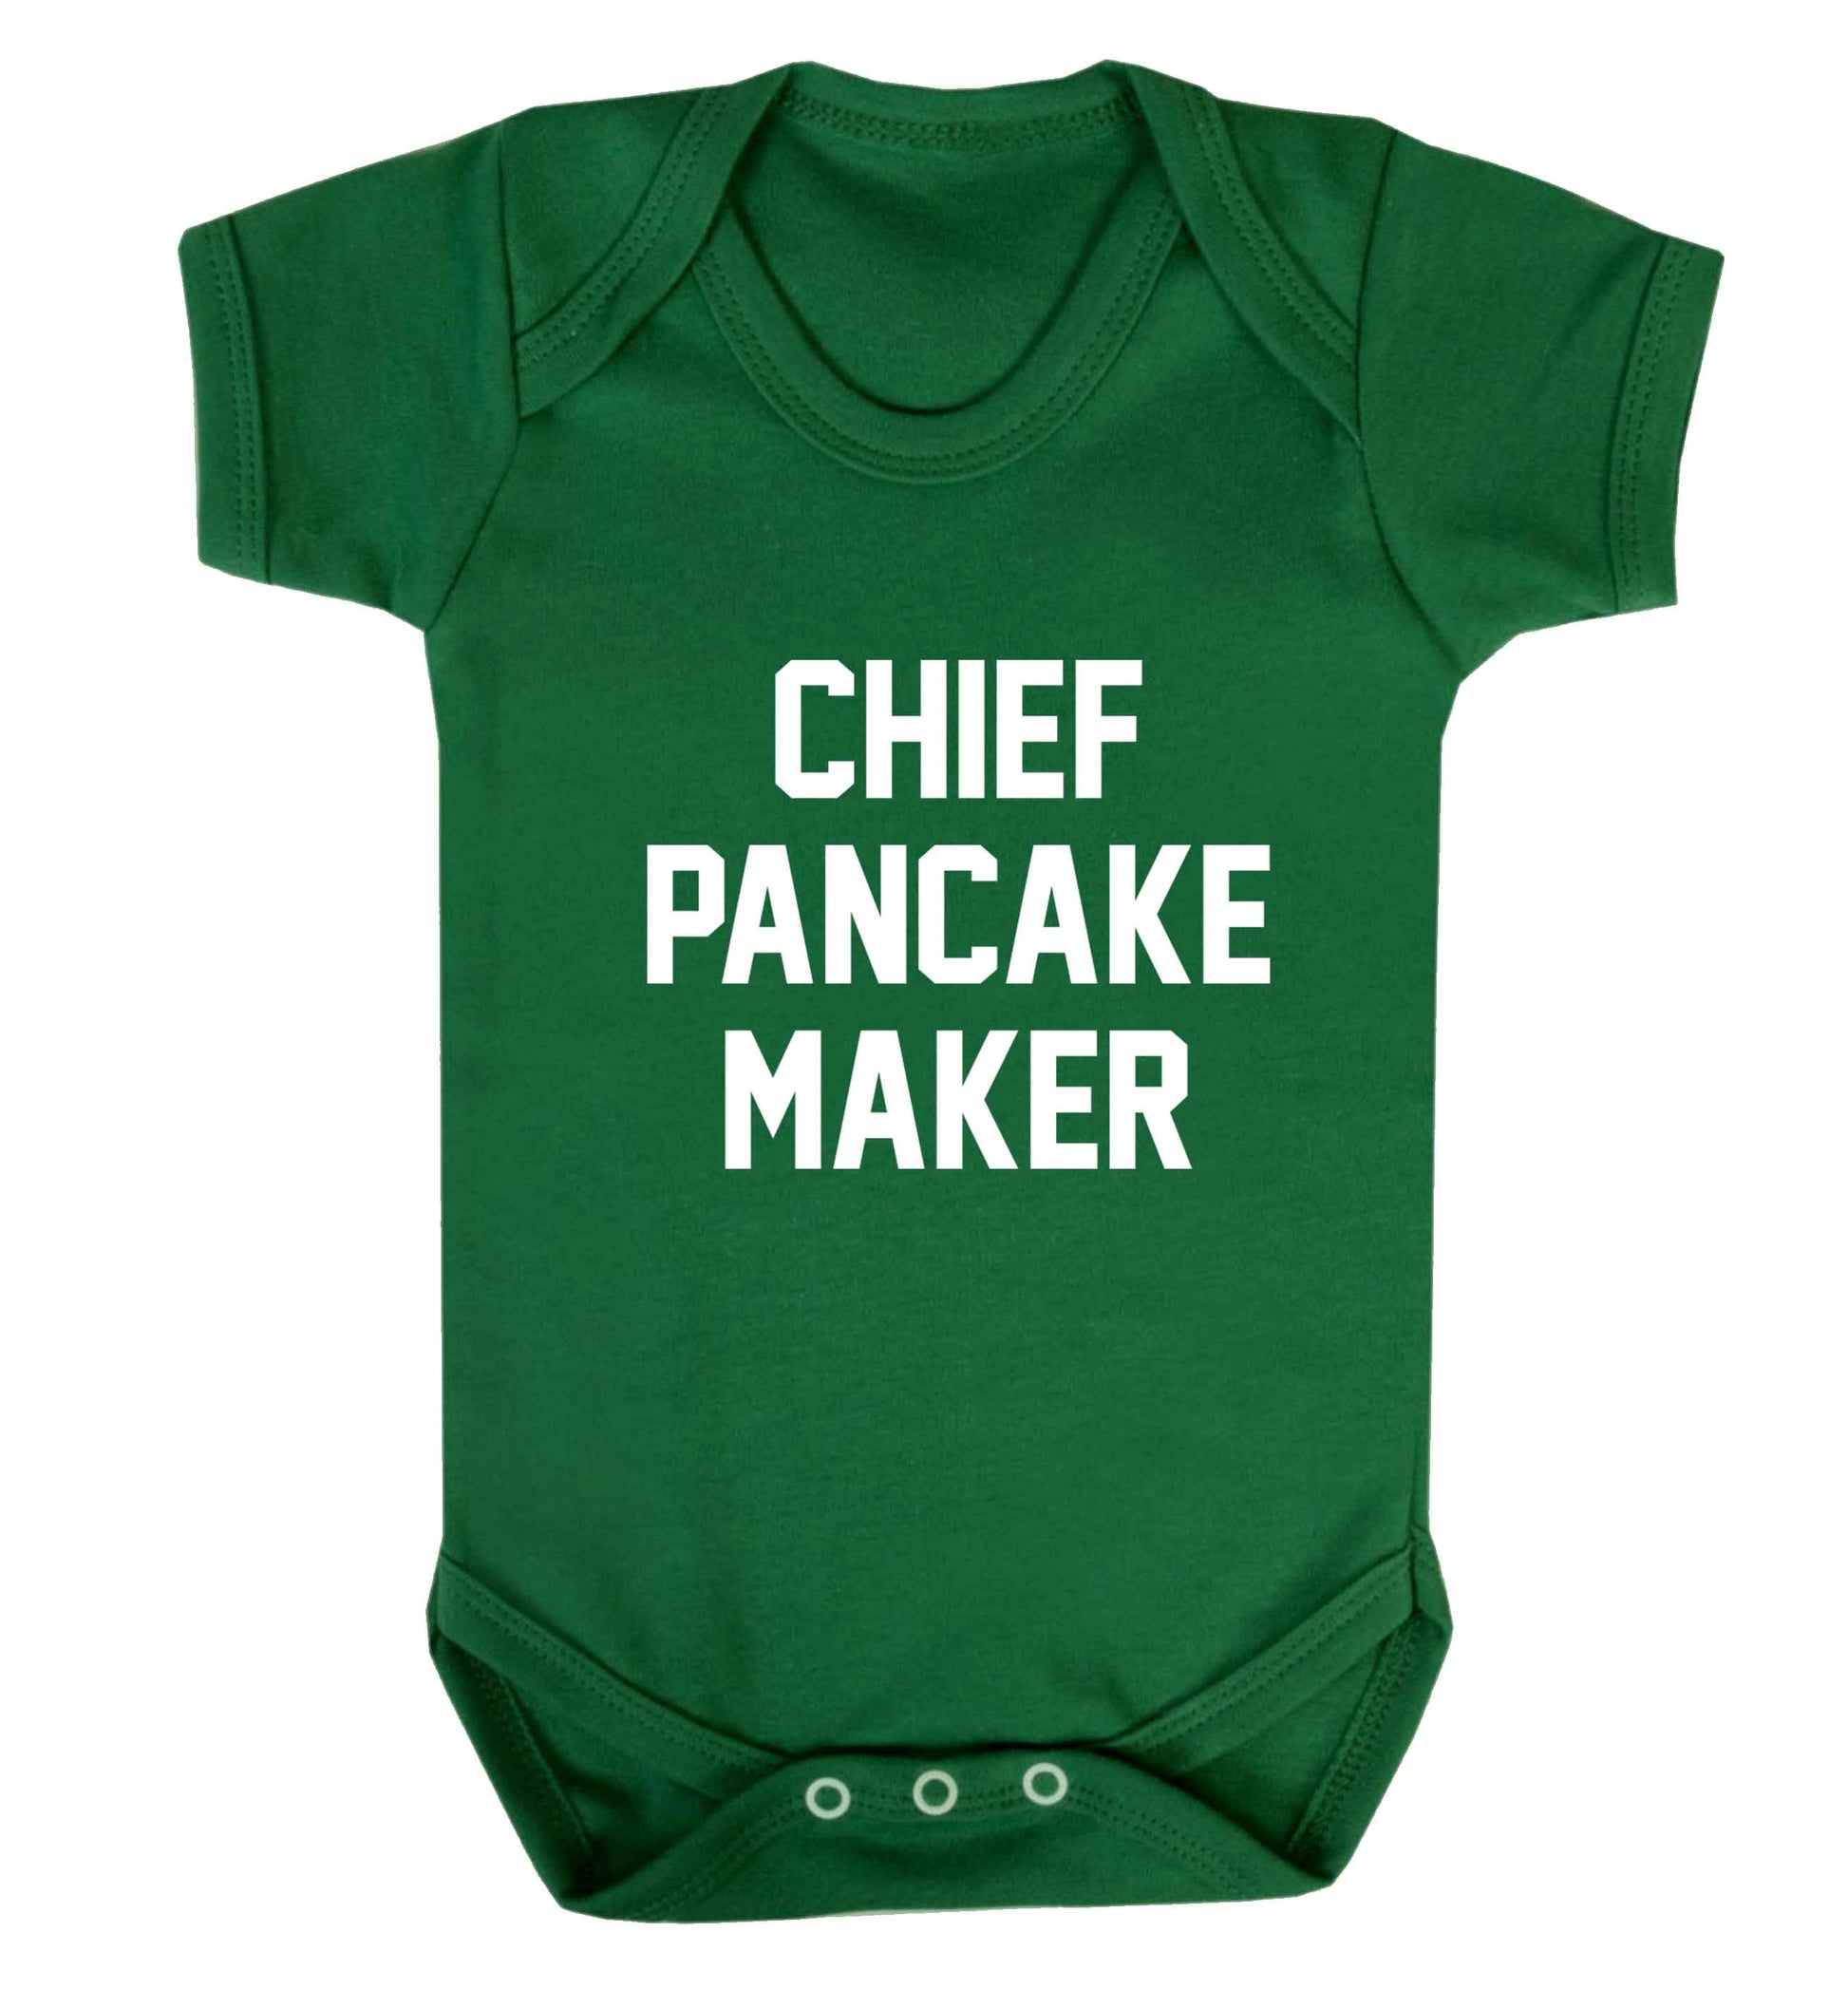 Chief pancake maker baby vest green 18-24 months